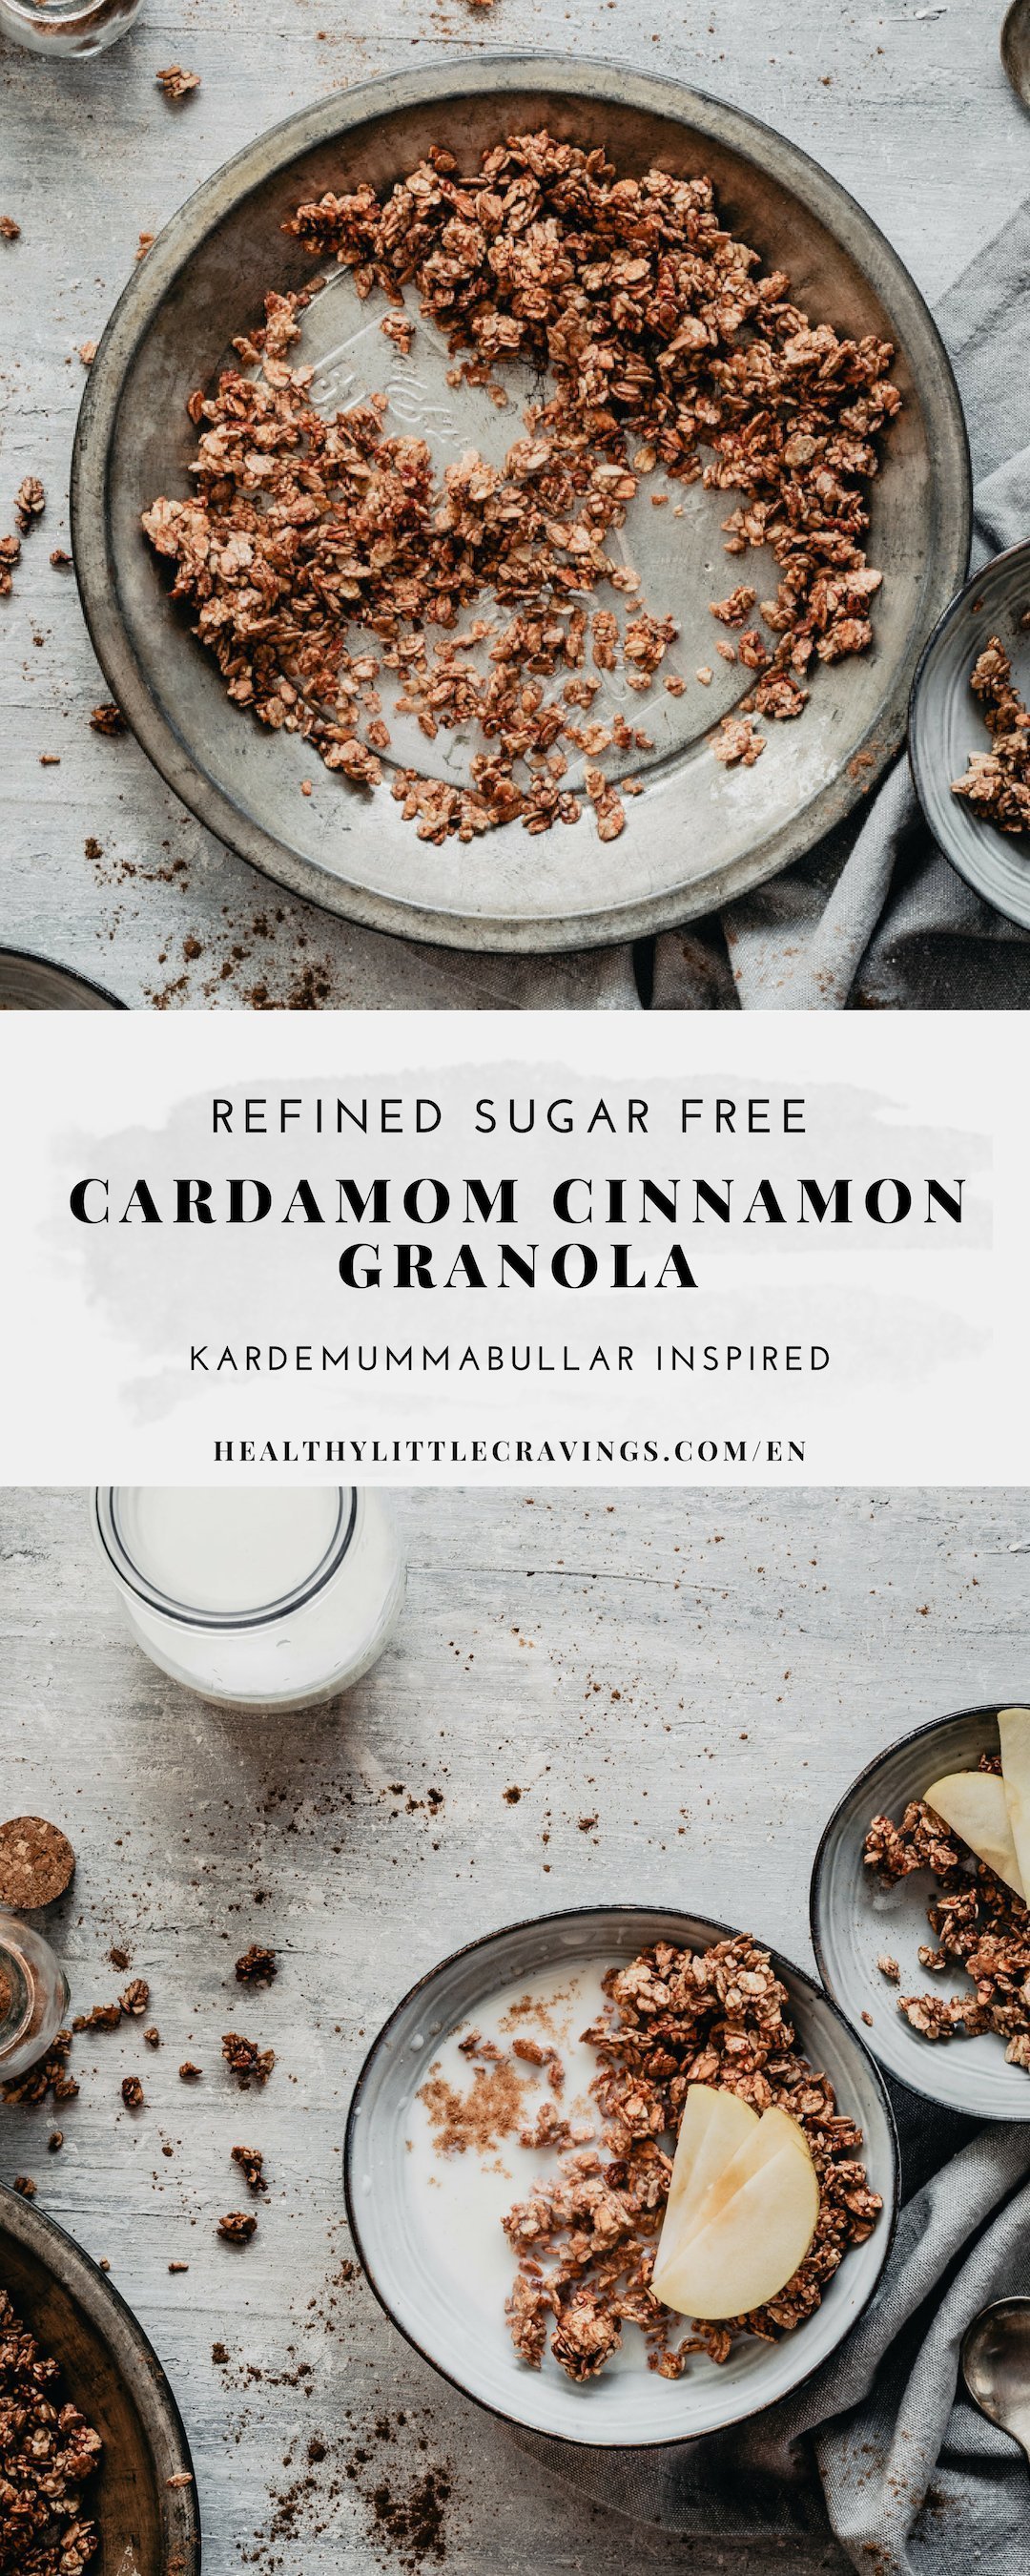 Healthy cinnamon granola with cardamom easy to make